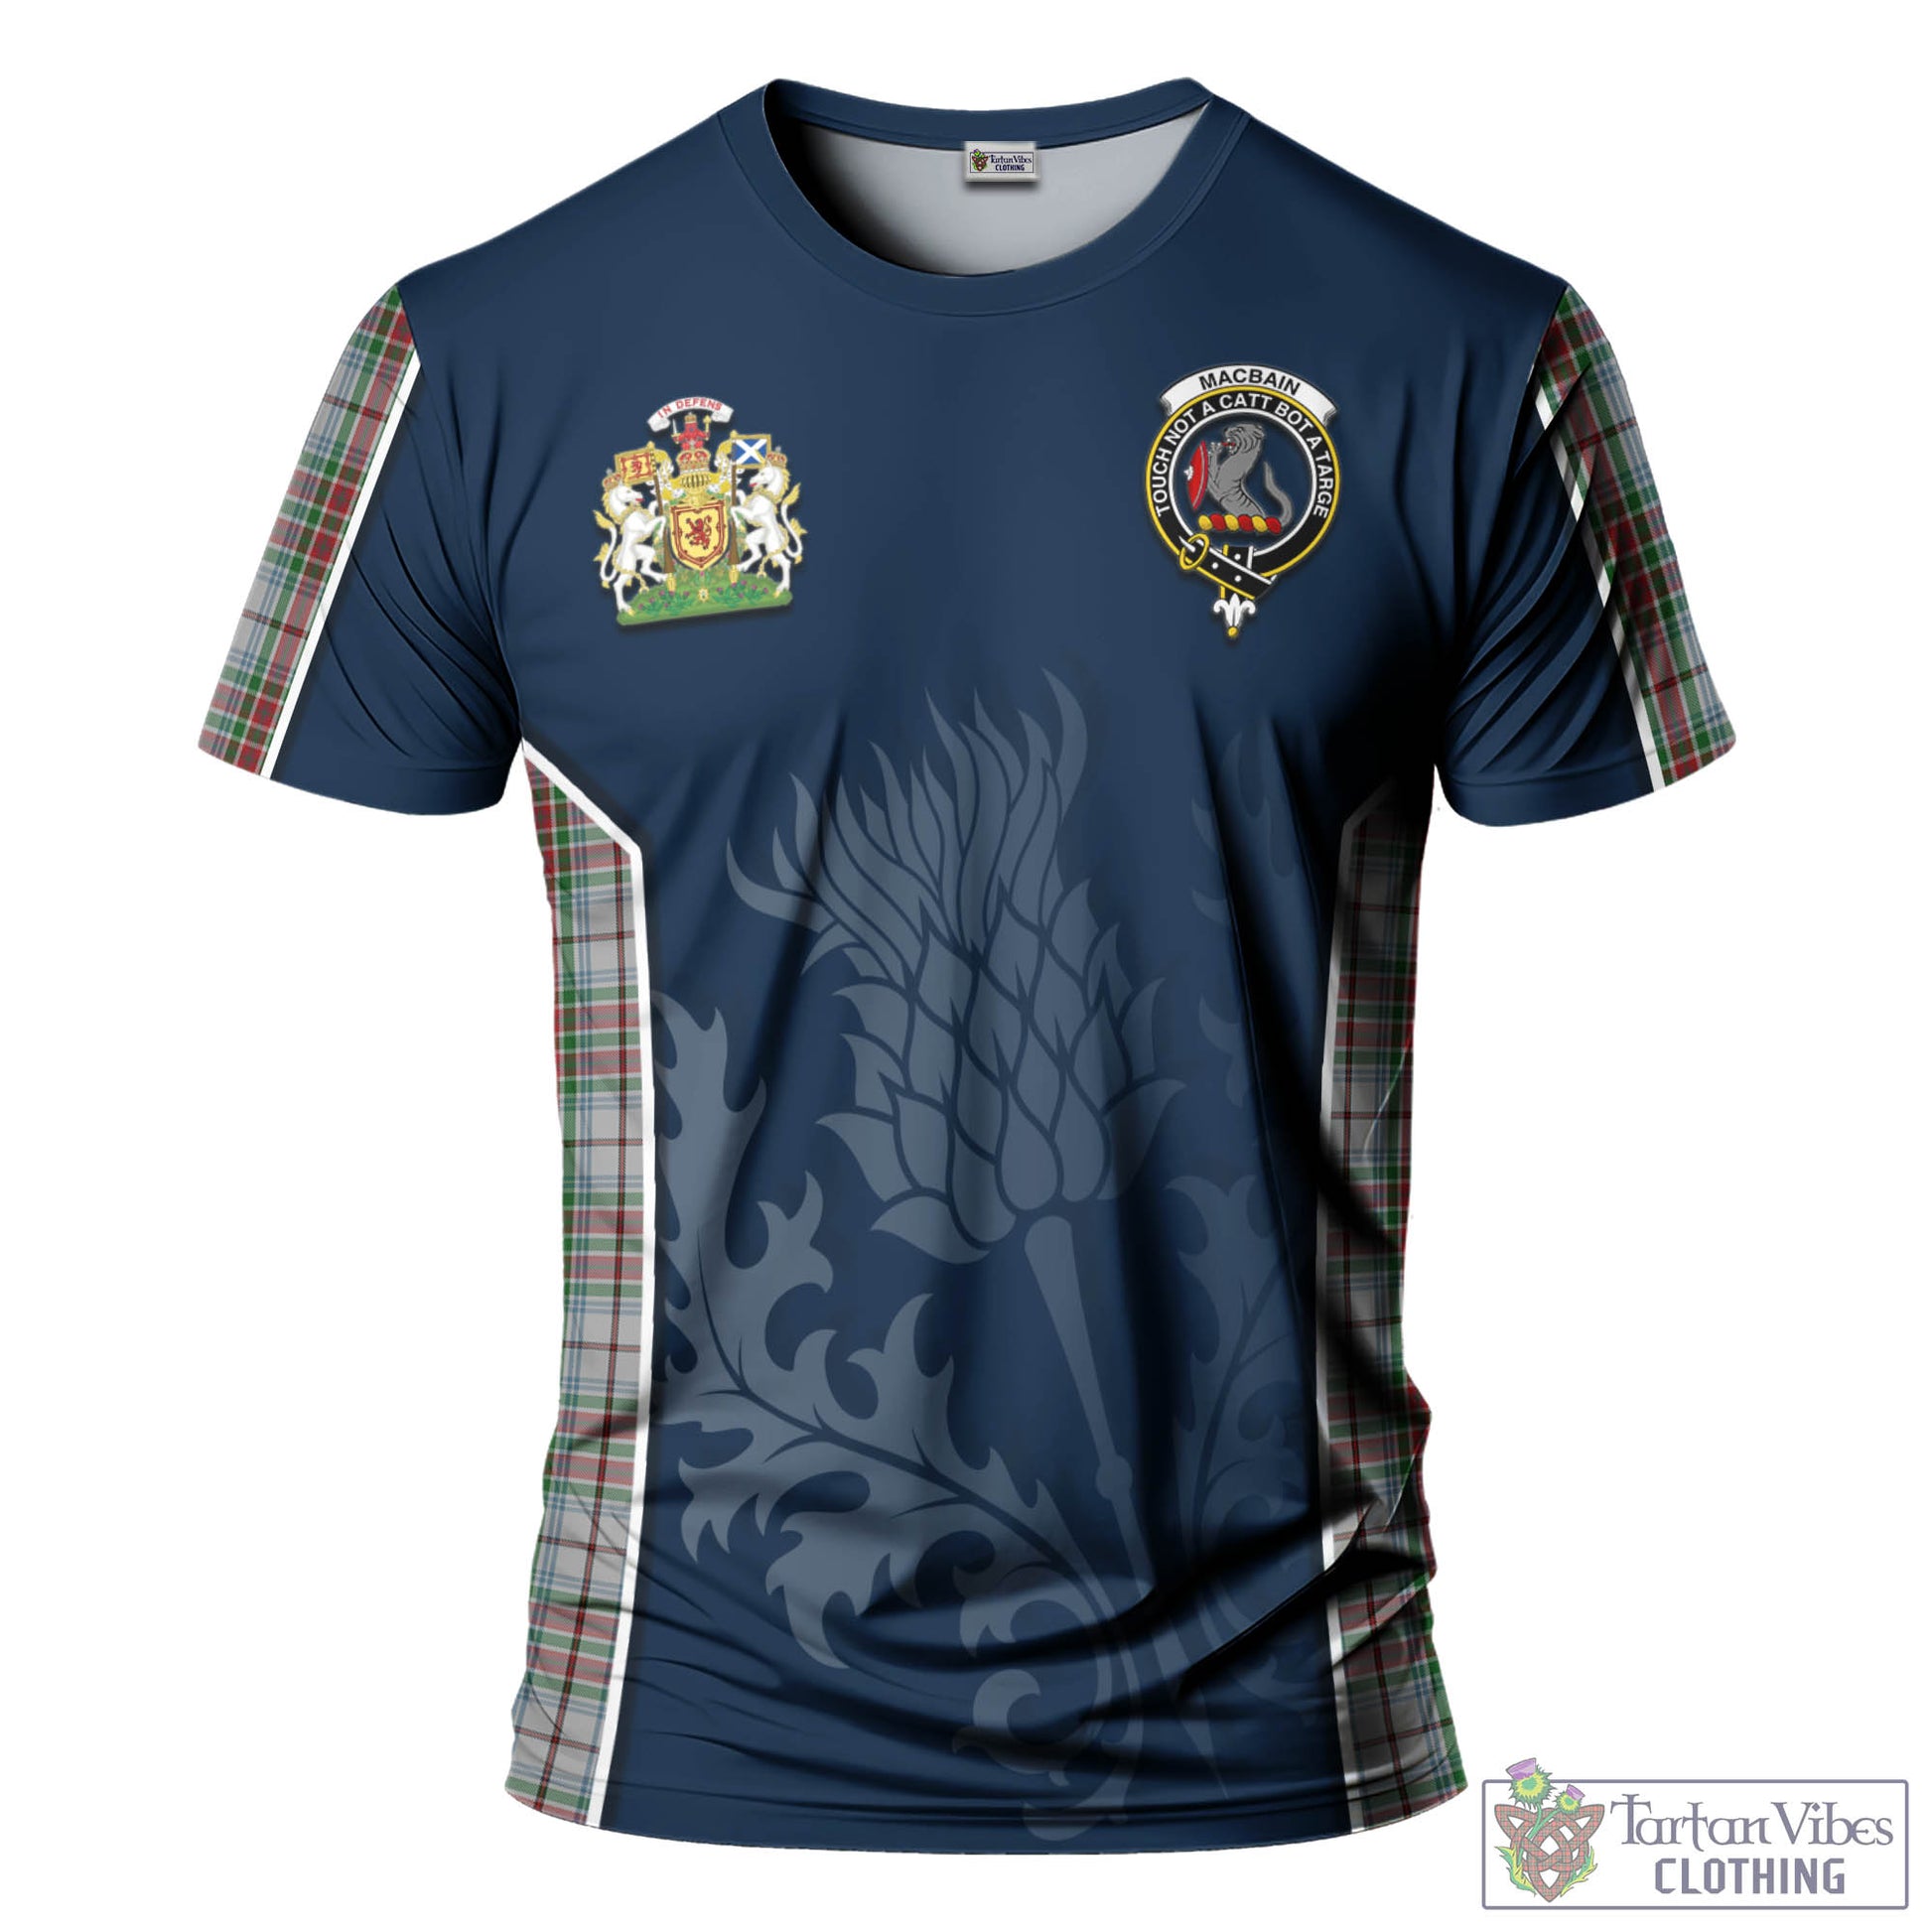 Tartan Vibes Clothing MacBain Dress Tartan T-Shirt with Family Crest and Scottish Thistle Vibes Sport Style